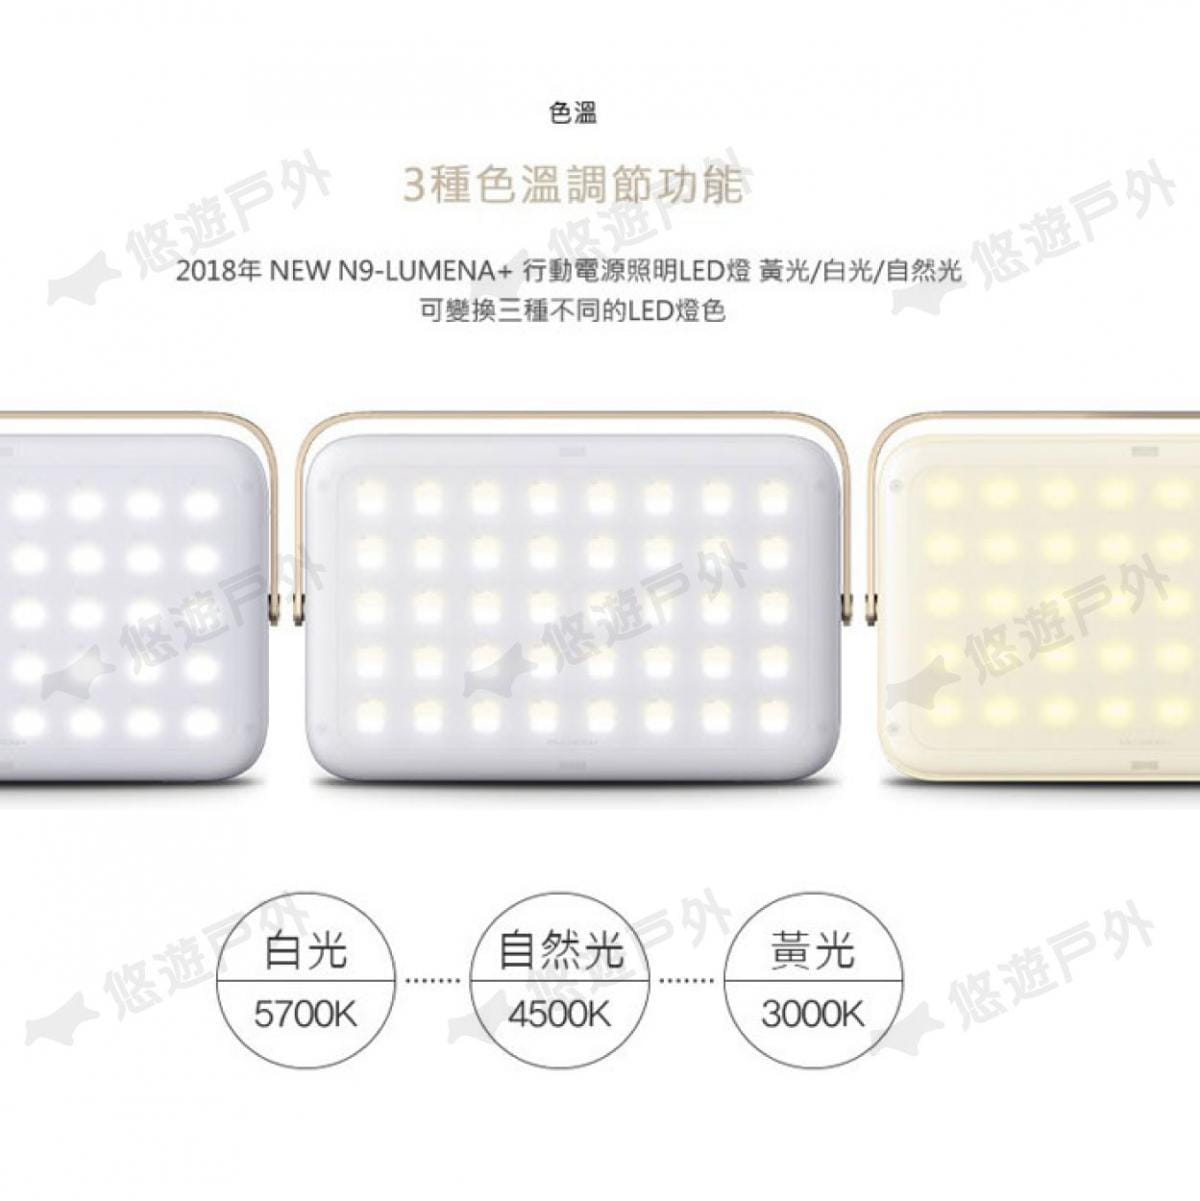 【N9 LUMENA+】行動電源照明LED燈 大N9 (悠遊˙戶外) 5